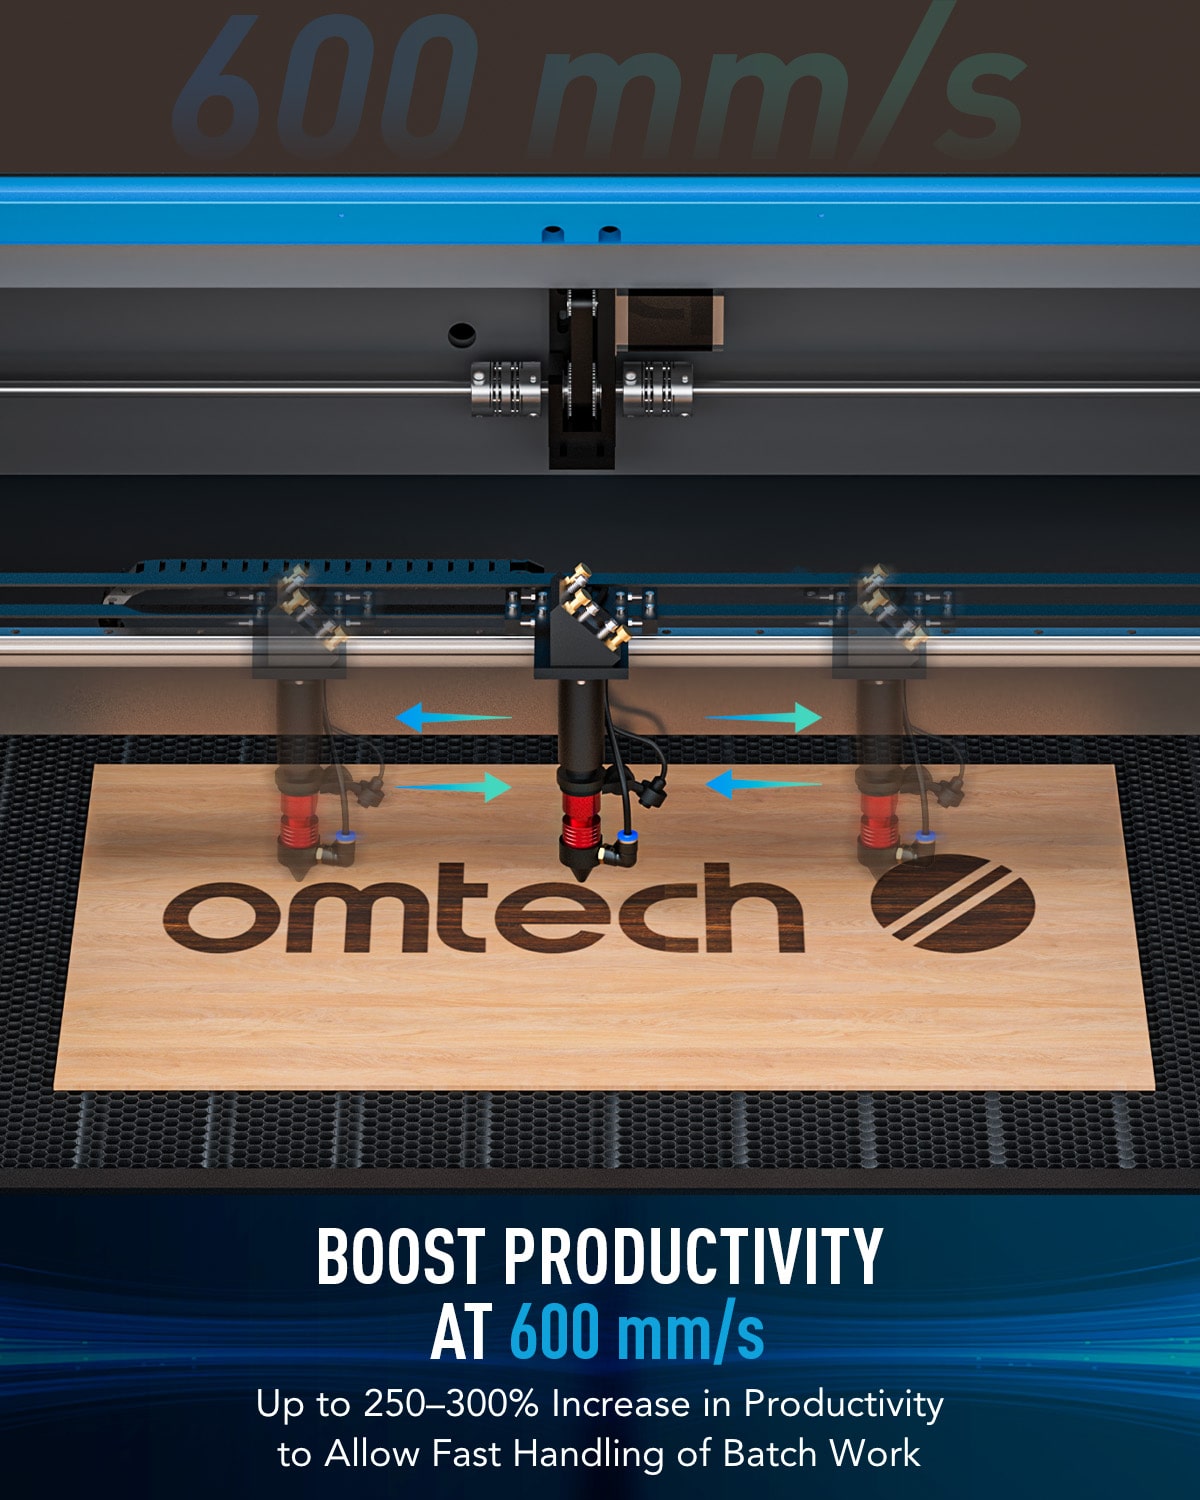 Omtech 100w 1060 24x40 Co2 Laser Engraver Cutter Cutting Machine